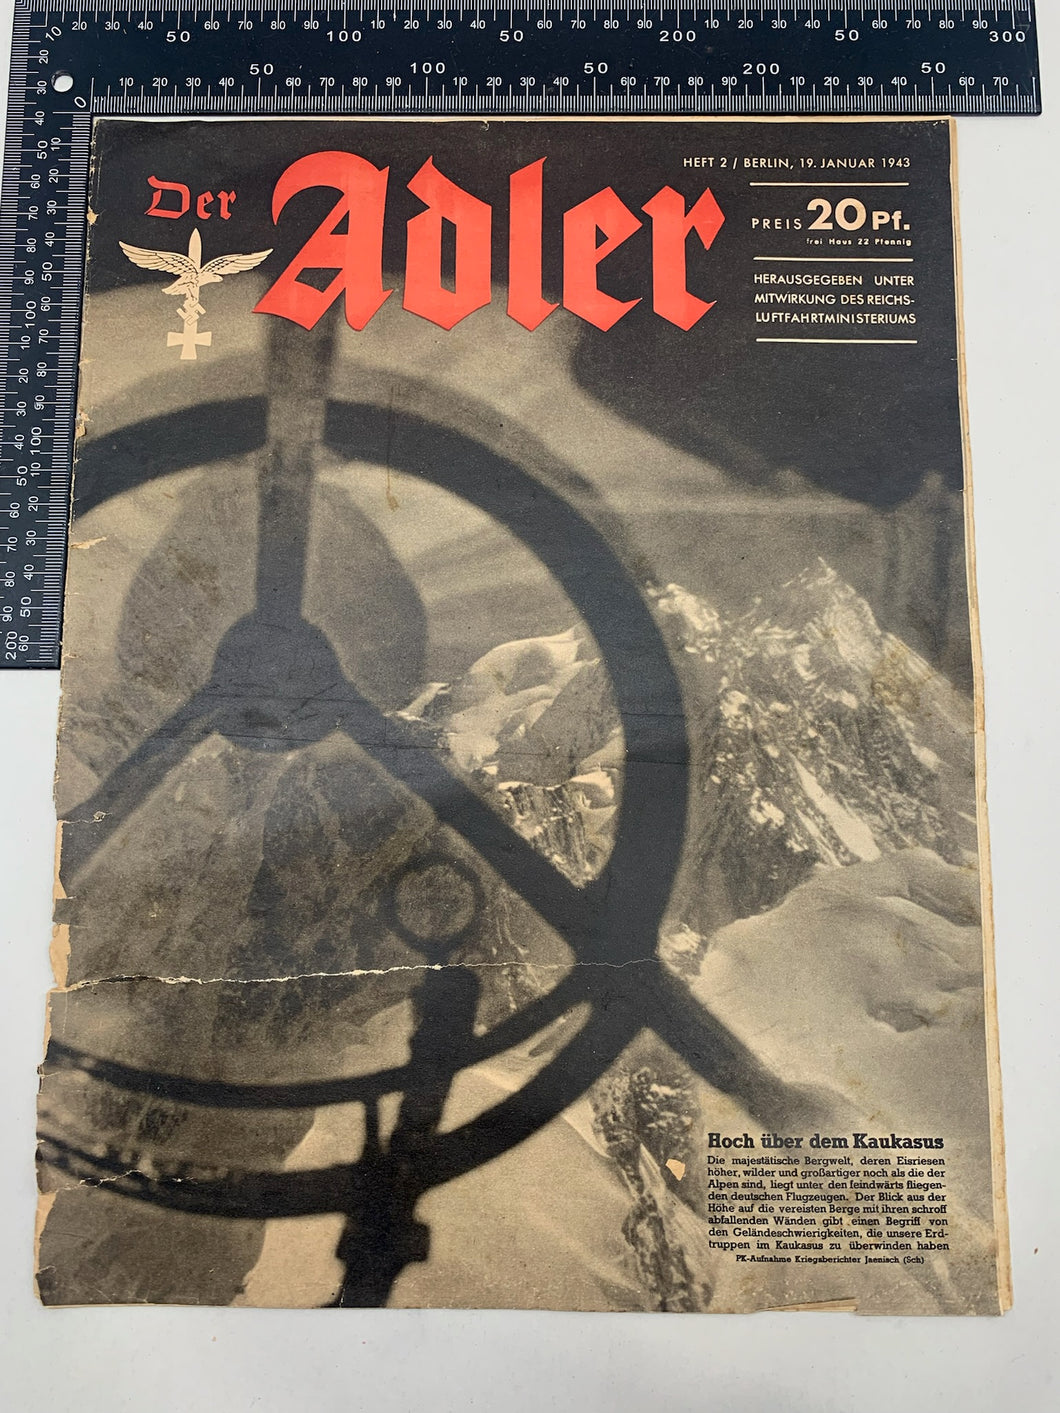 Der Adler Luftwaffe Magazine Original WW2 German - 19th January 1943